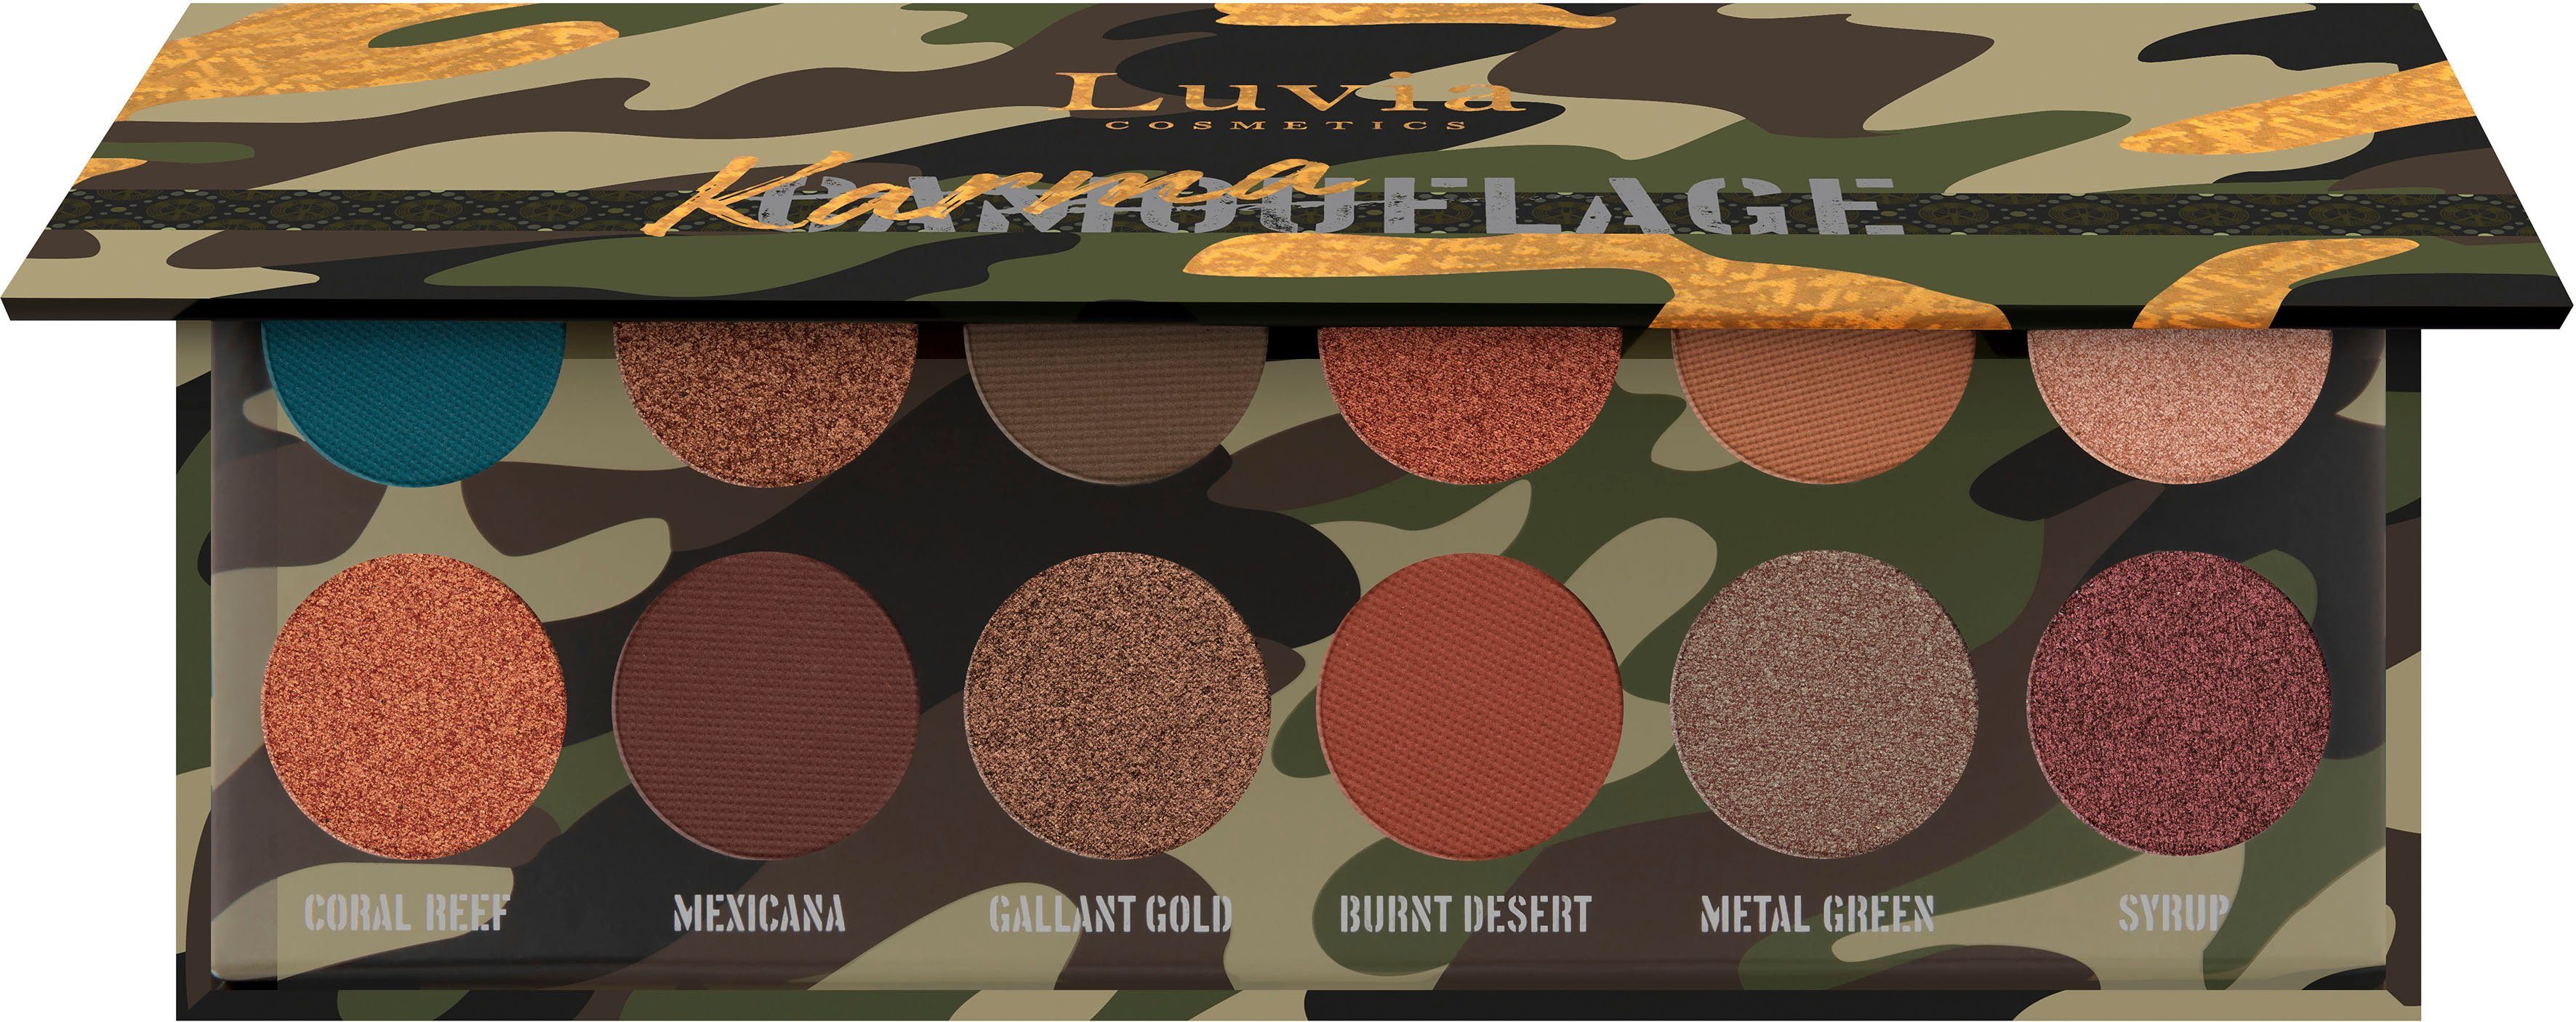 Luvia Cosmetics Lidschatten-Palette Karmaflage